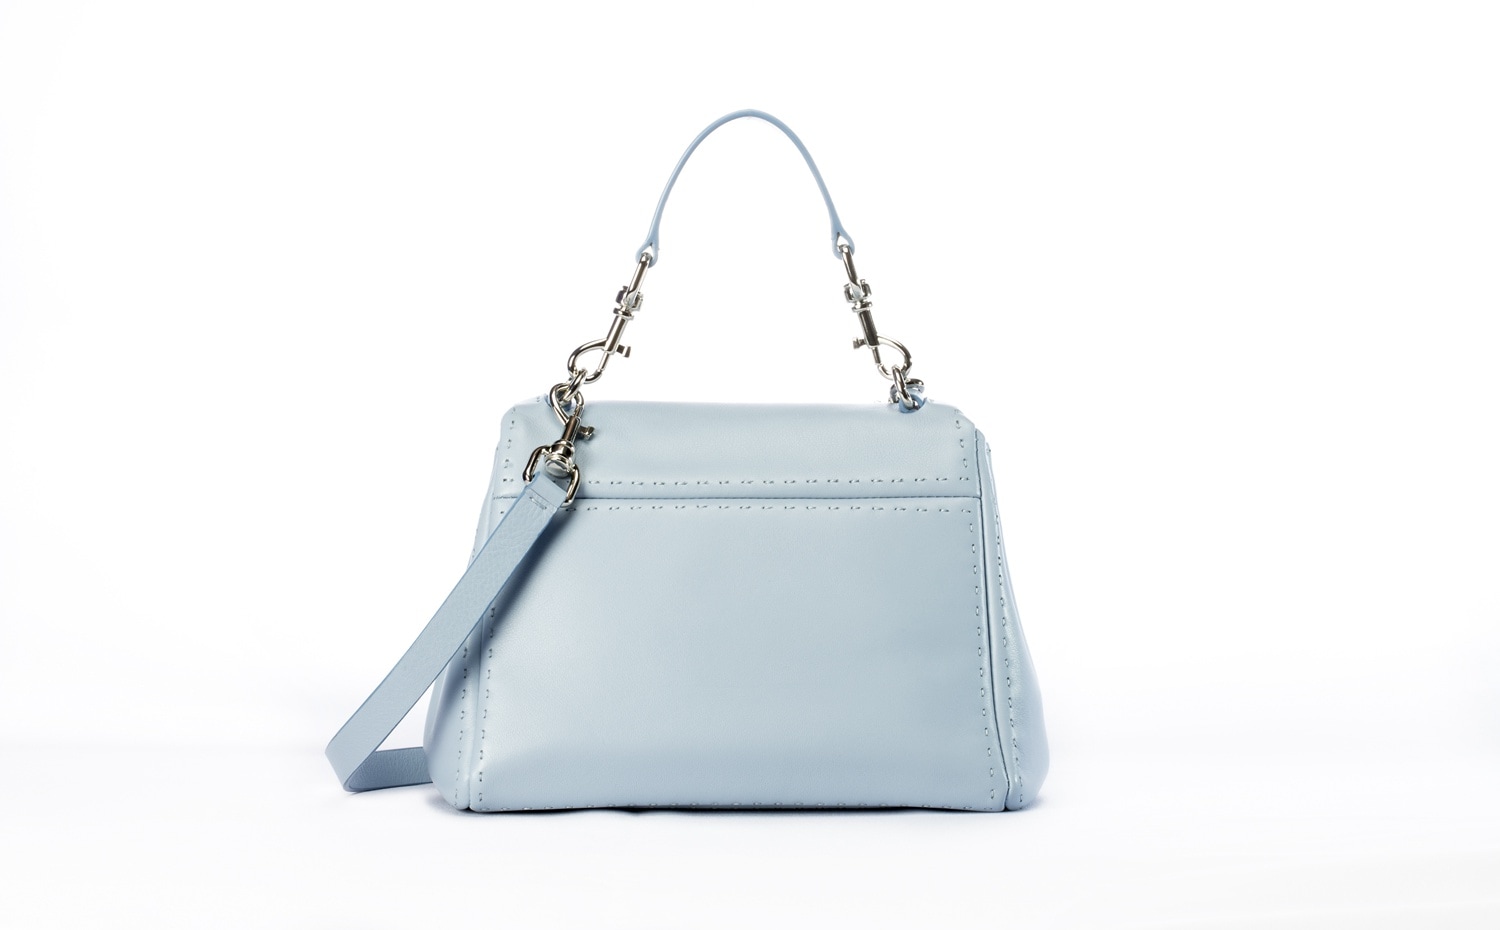 CH Carolina Herrera: Petit Baret Bag in Baby Blue